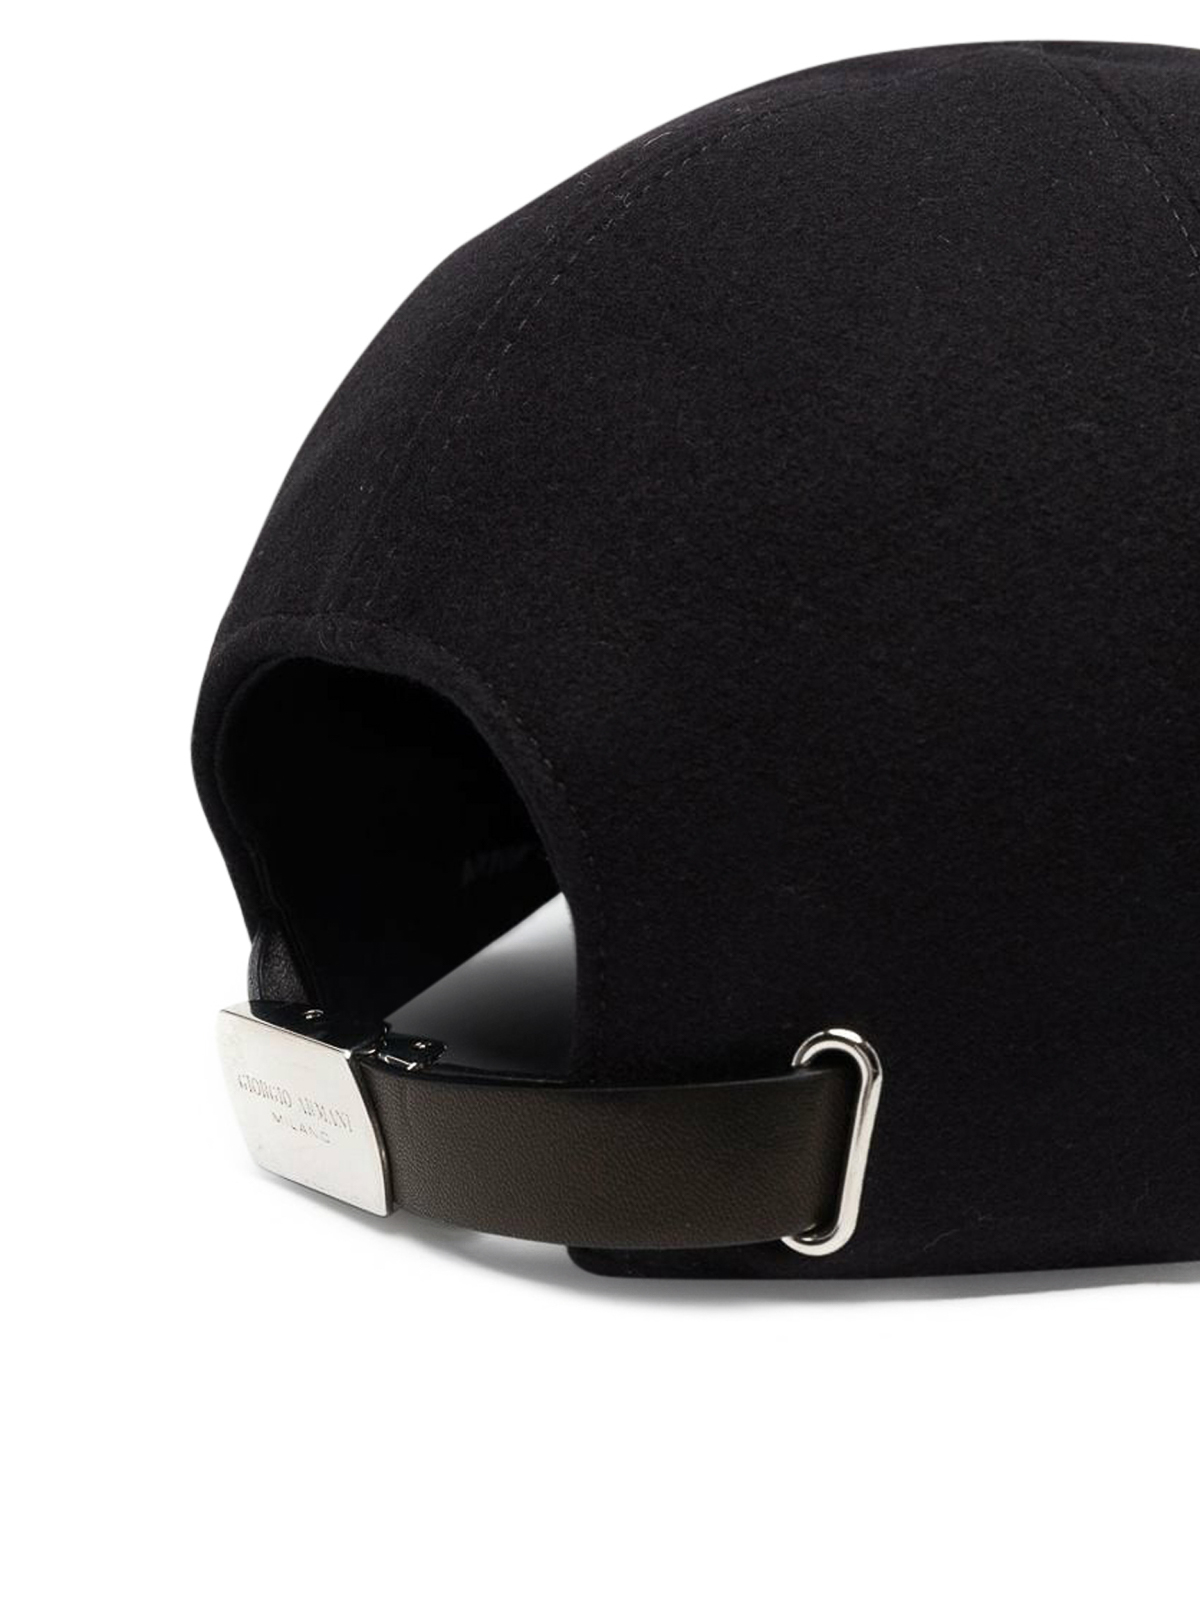 Hats & caps Giorgio Armani - Wool blend baseball hat